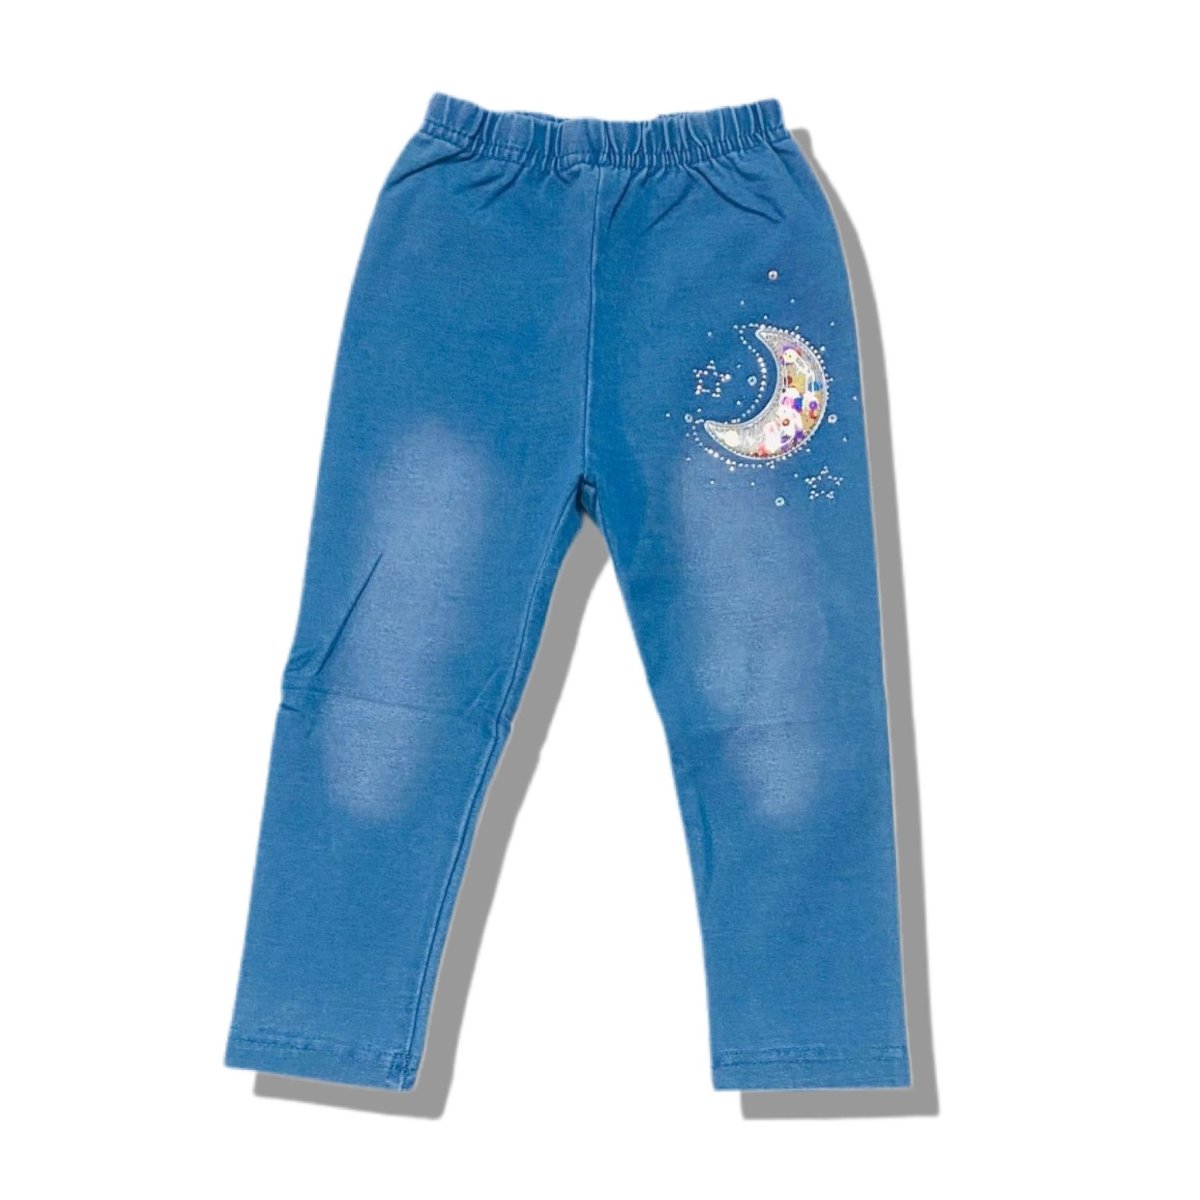 Leggins In Jeans Neonata - Mstore016